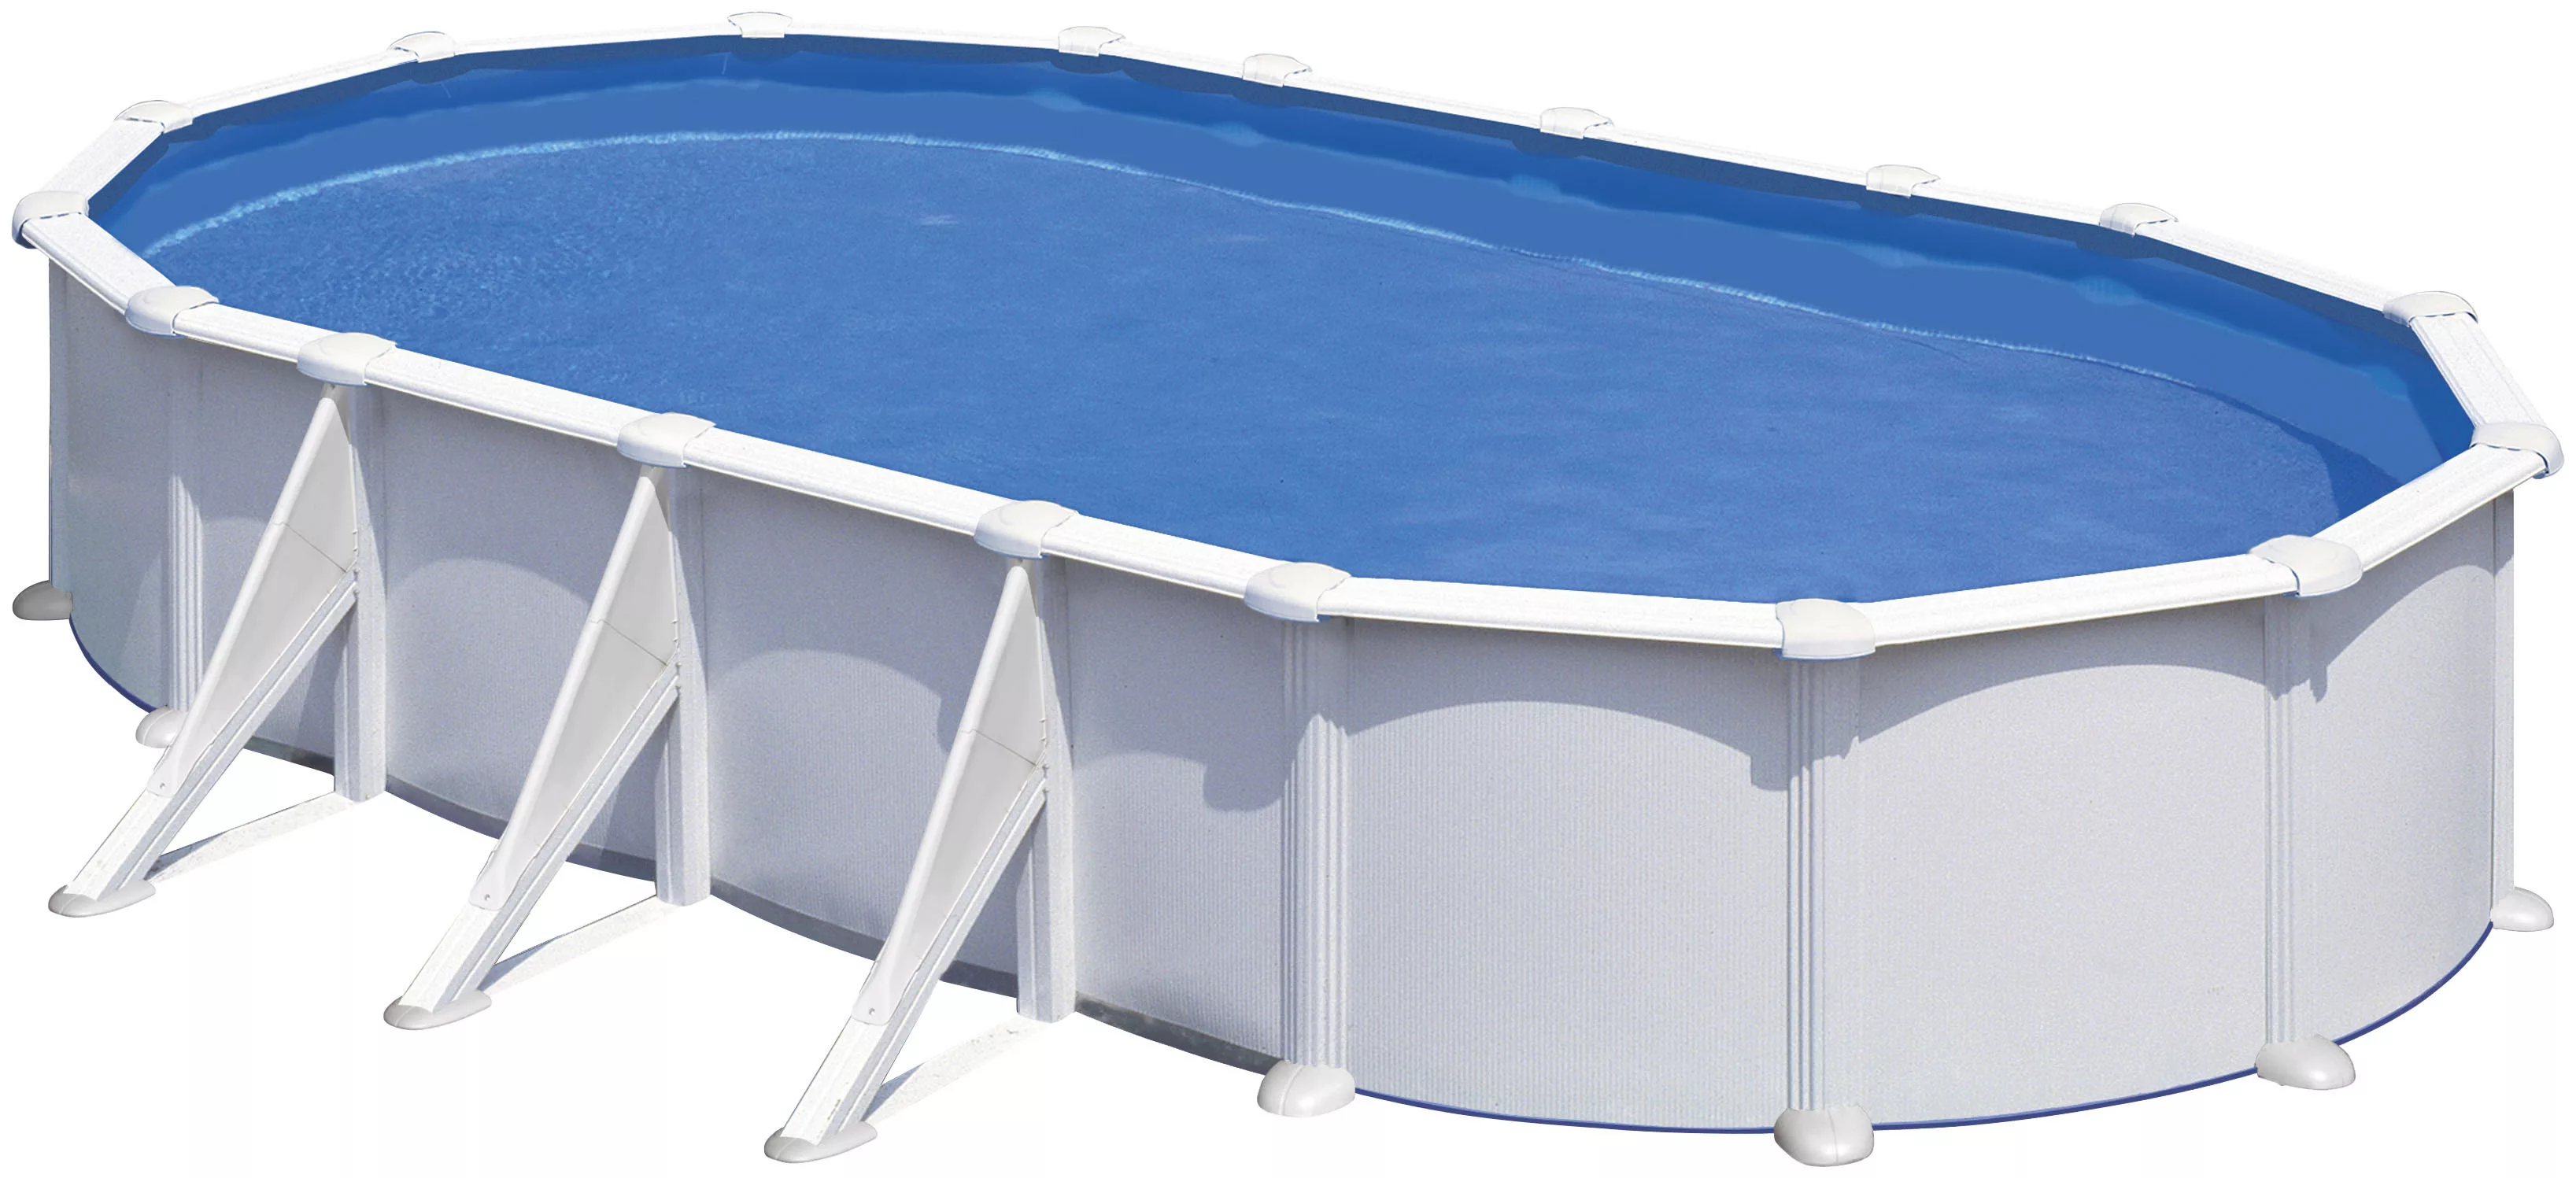 Gre Stahlwand-Pool Atlantis 730 cm x 375 cm x 132 cm Oval Weiß günstig online kaufen